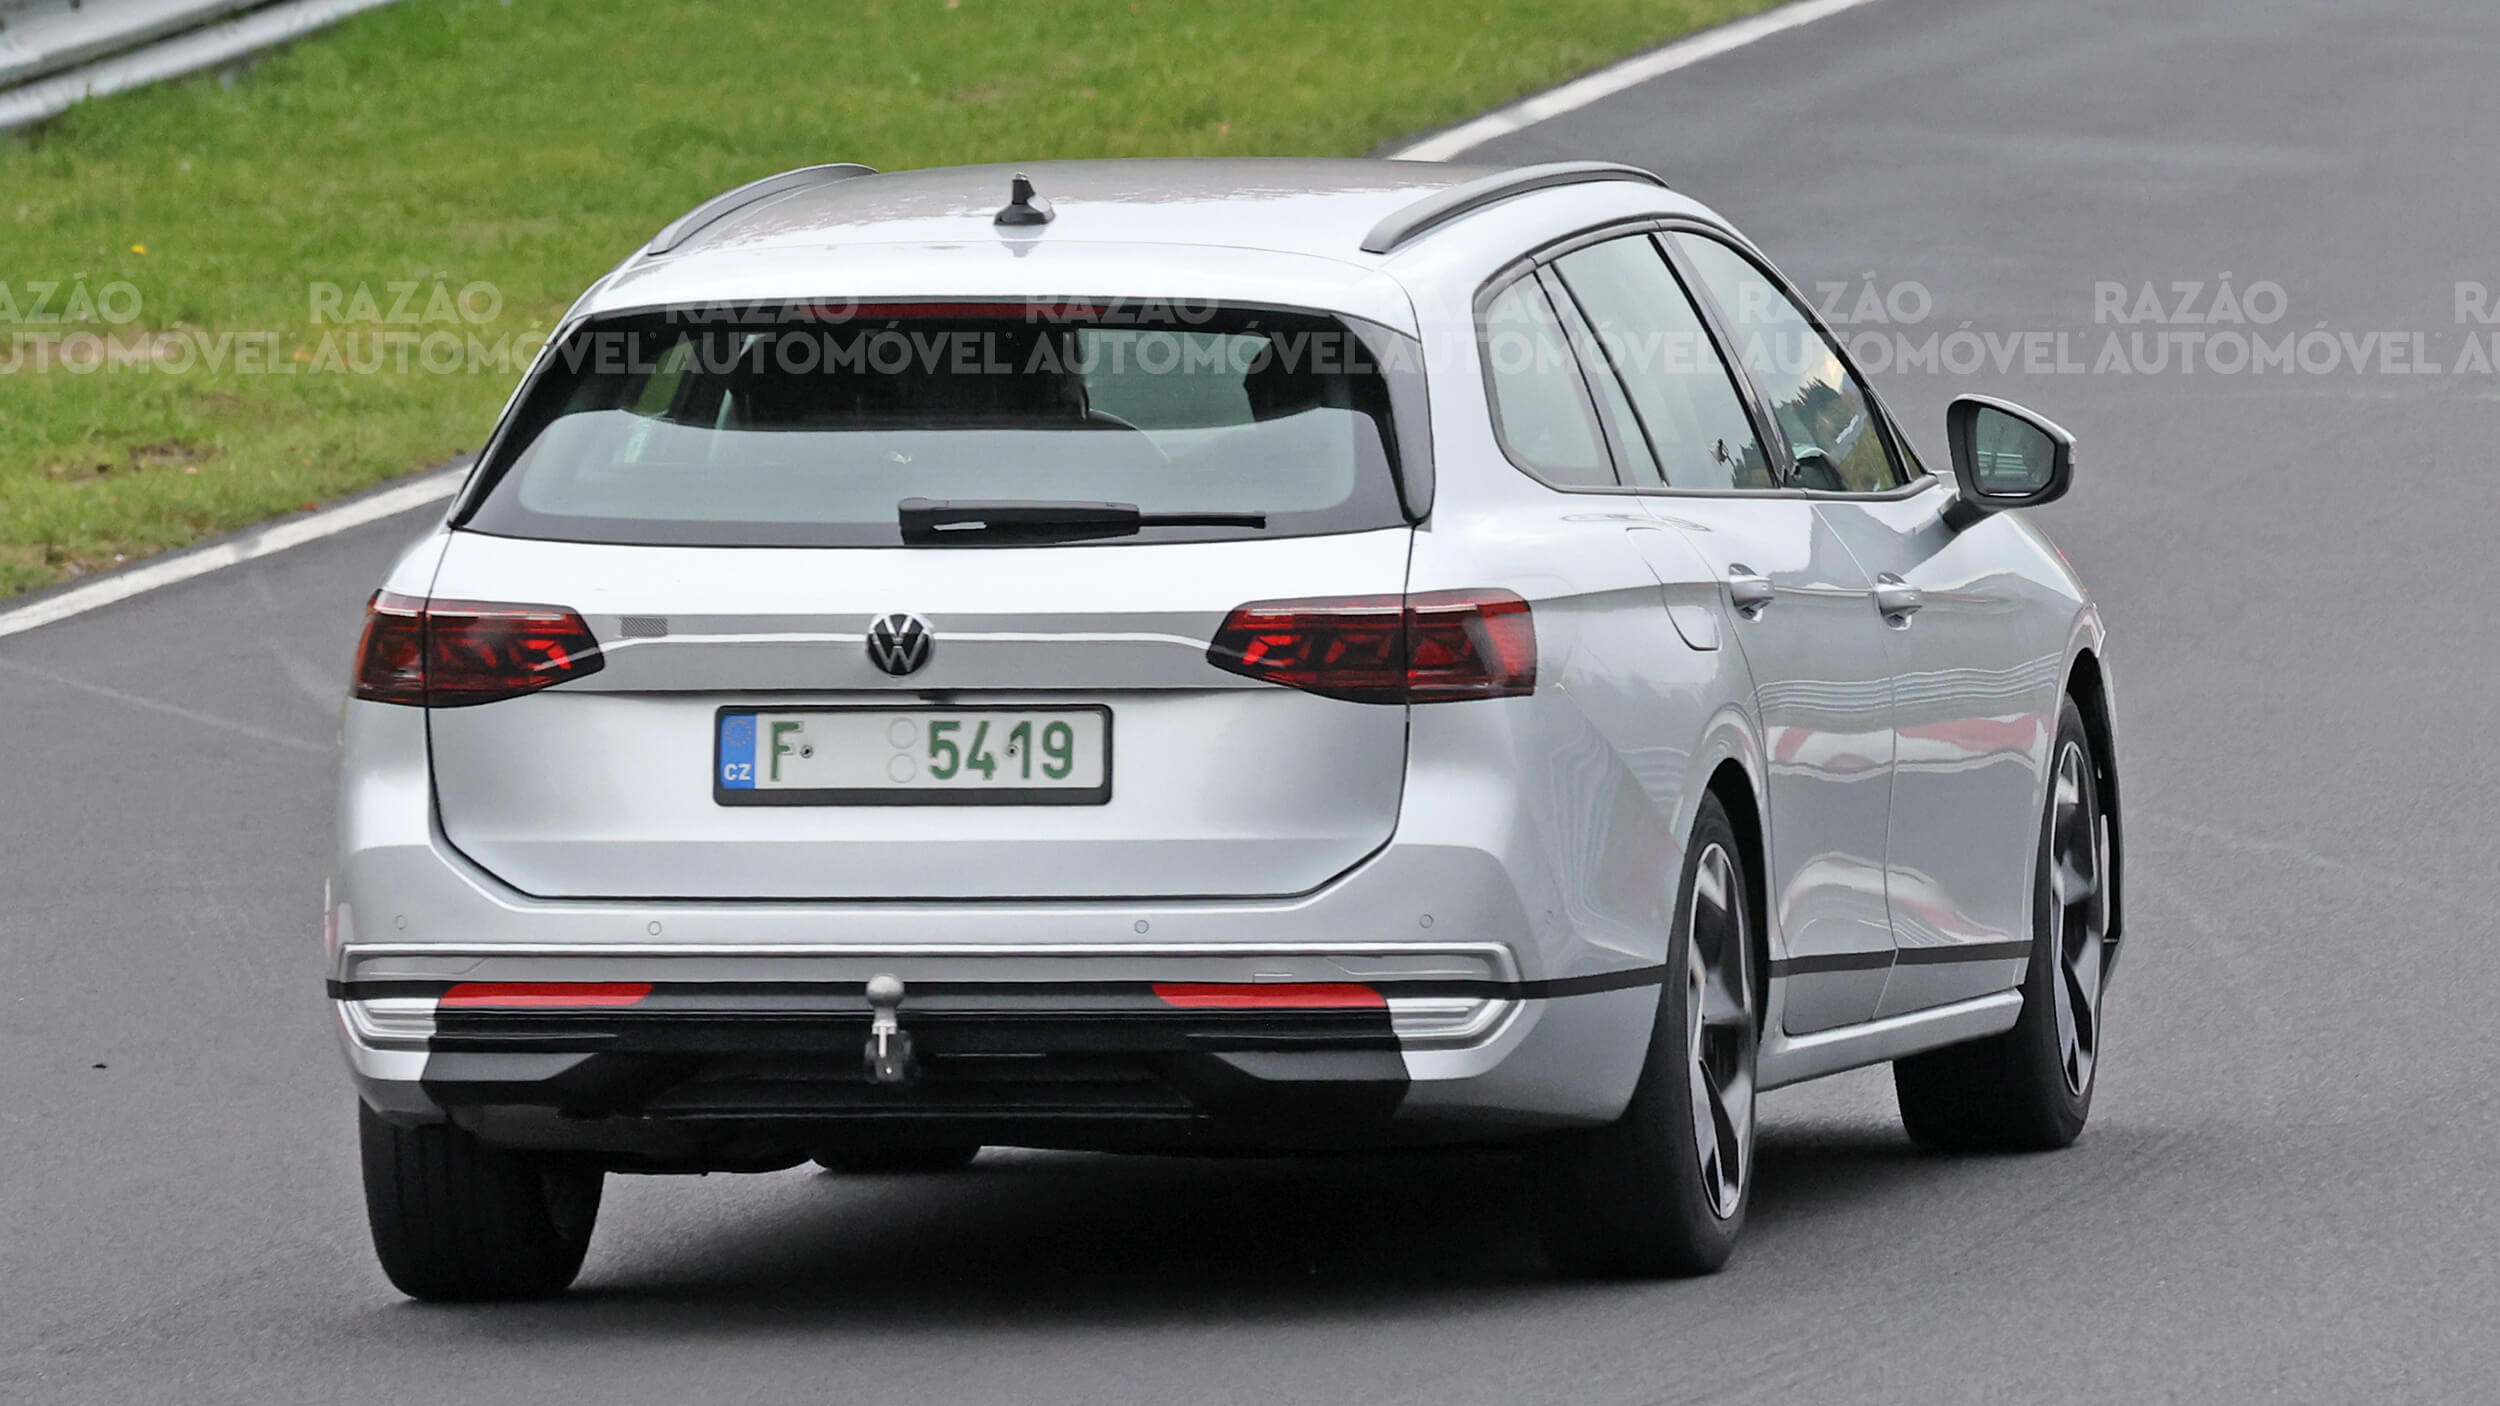 Volkswagen Passat Variant fotos-espia em pista vista traseira